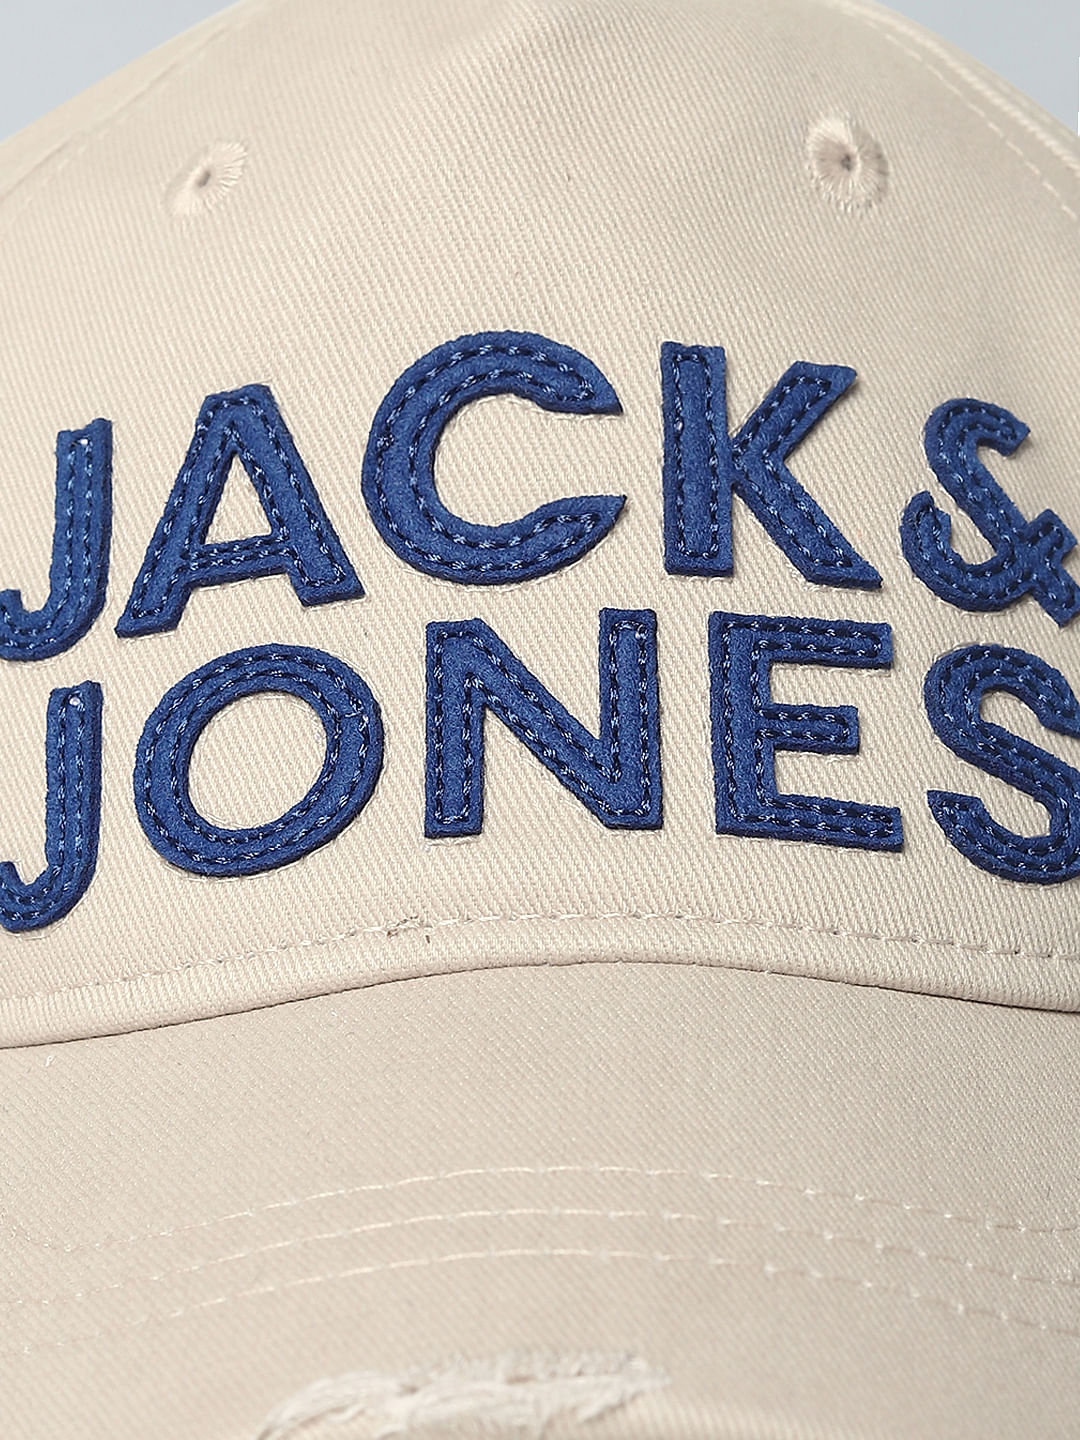 Jack & Jones Originals round logo t-shirt | ASOS